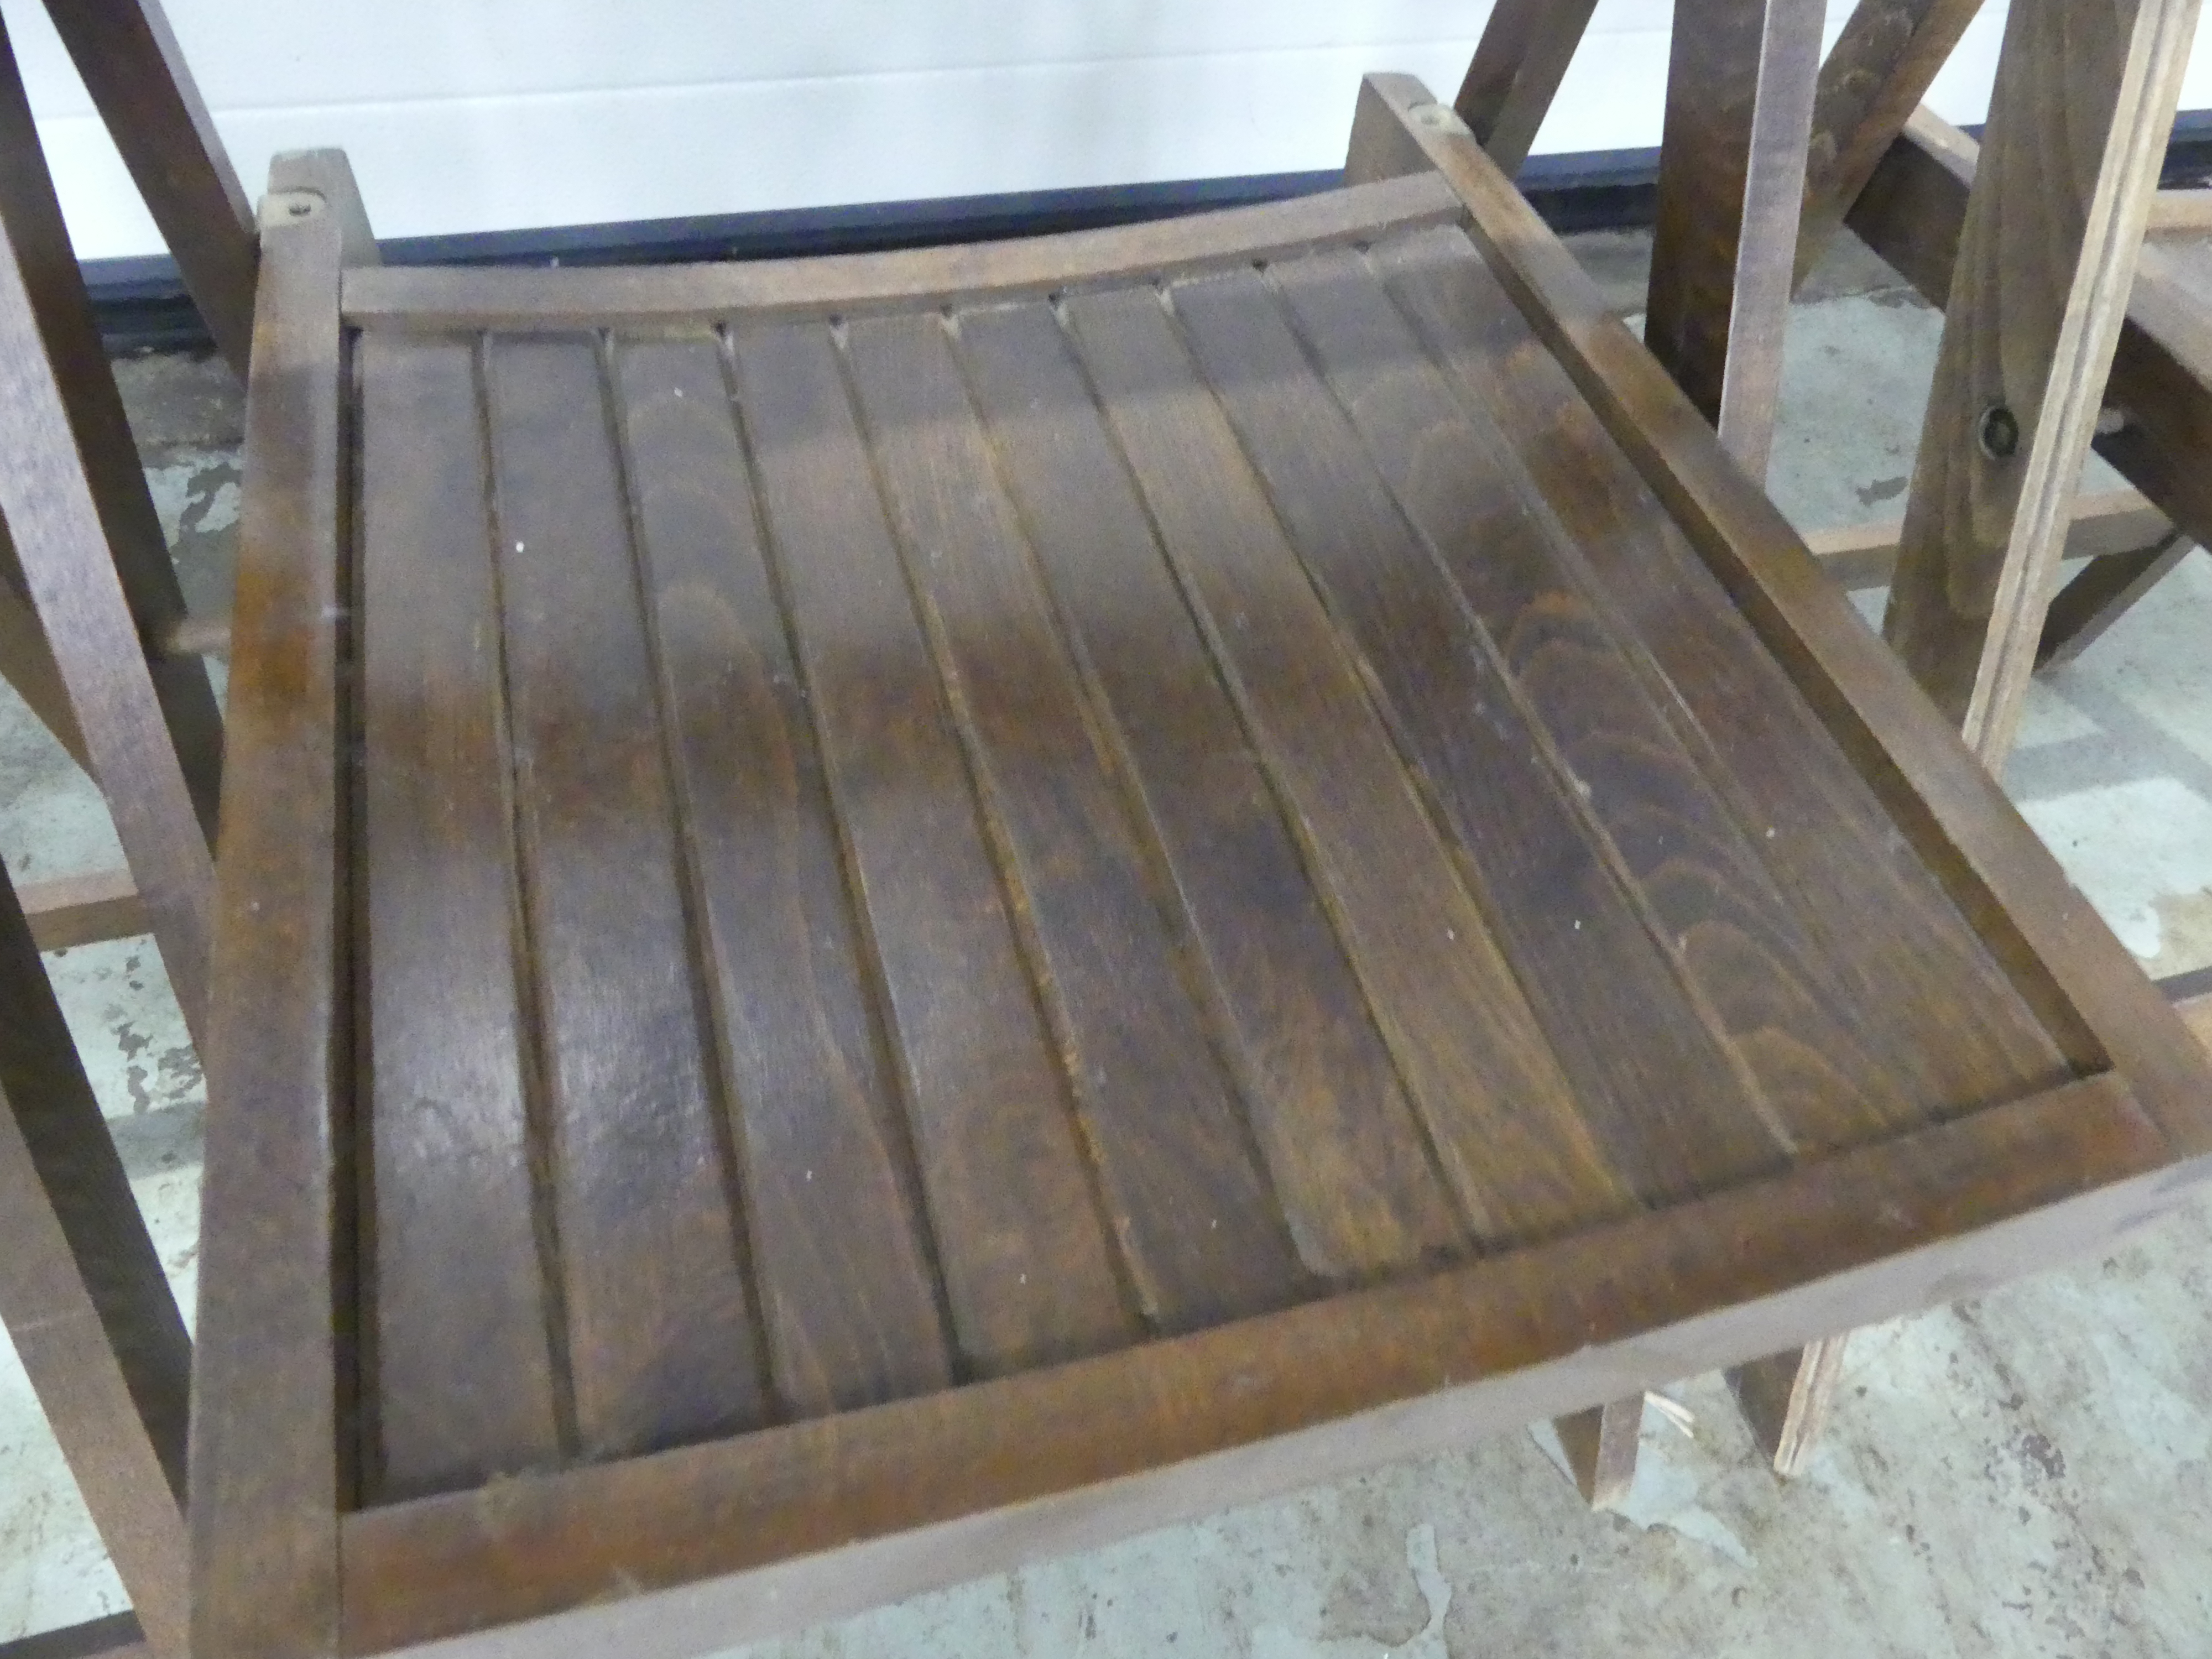 3x Vintage klapstoel, zithoogte 42cm 